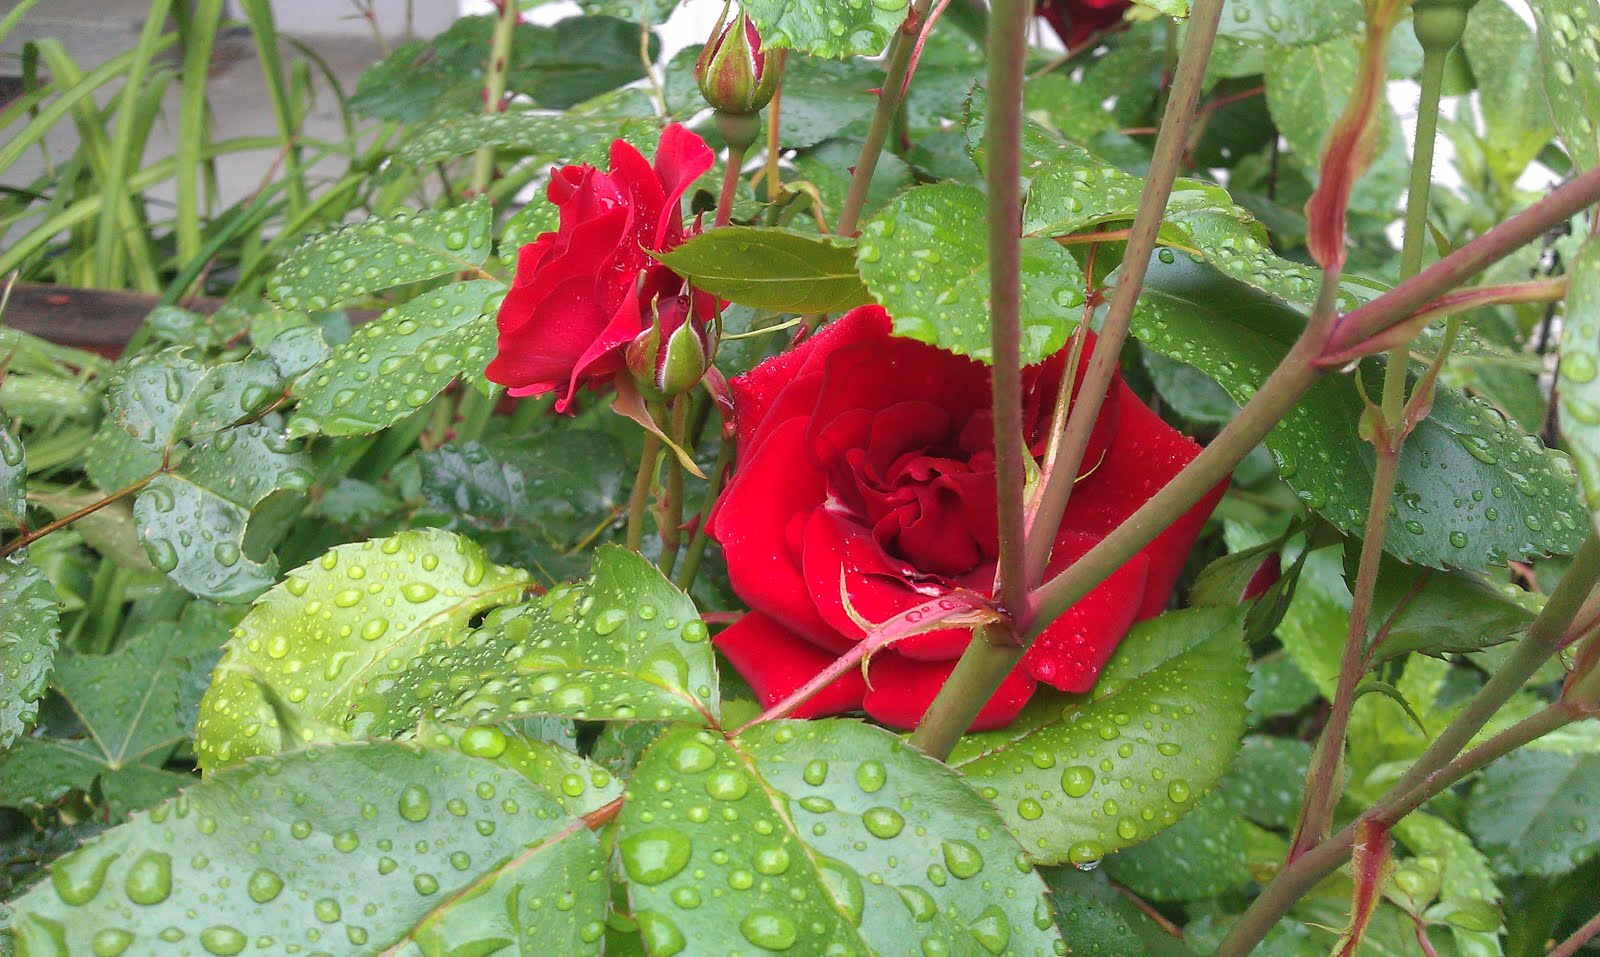 Raindrops on Roses!